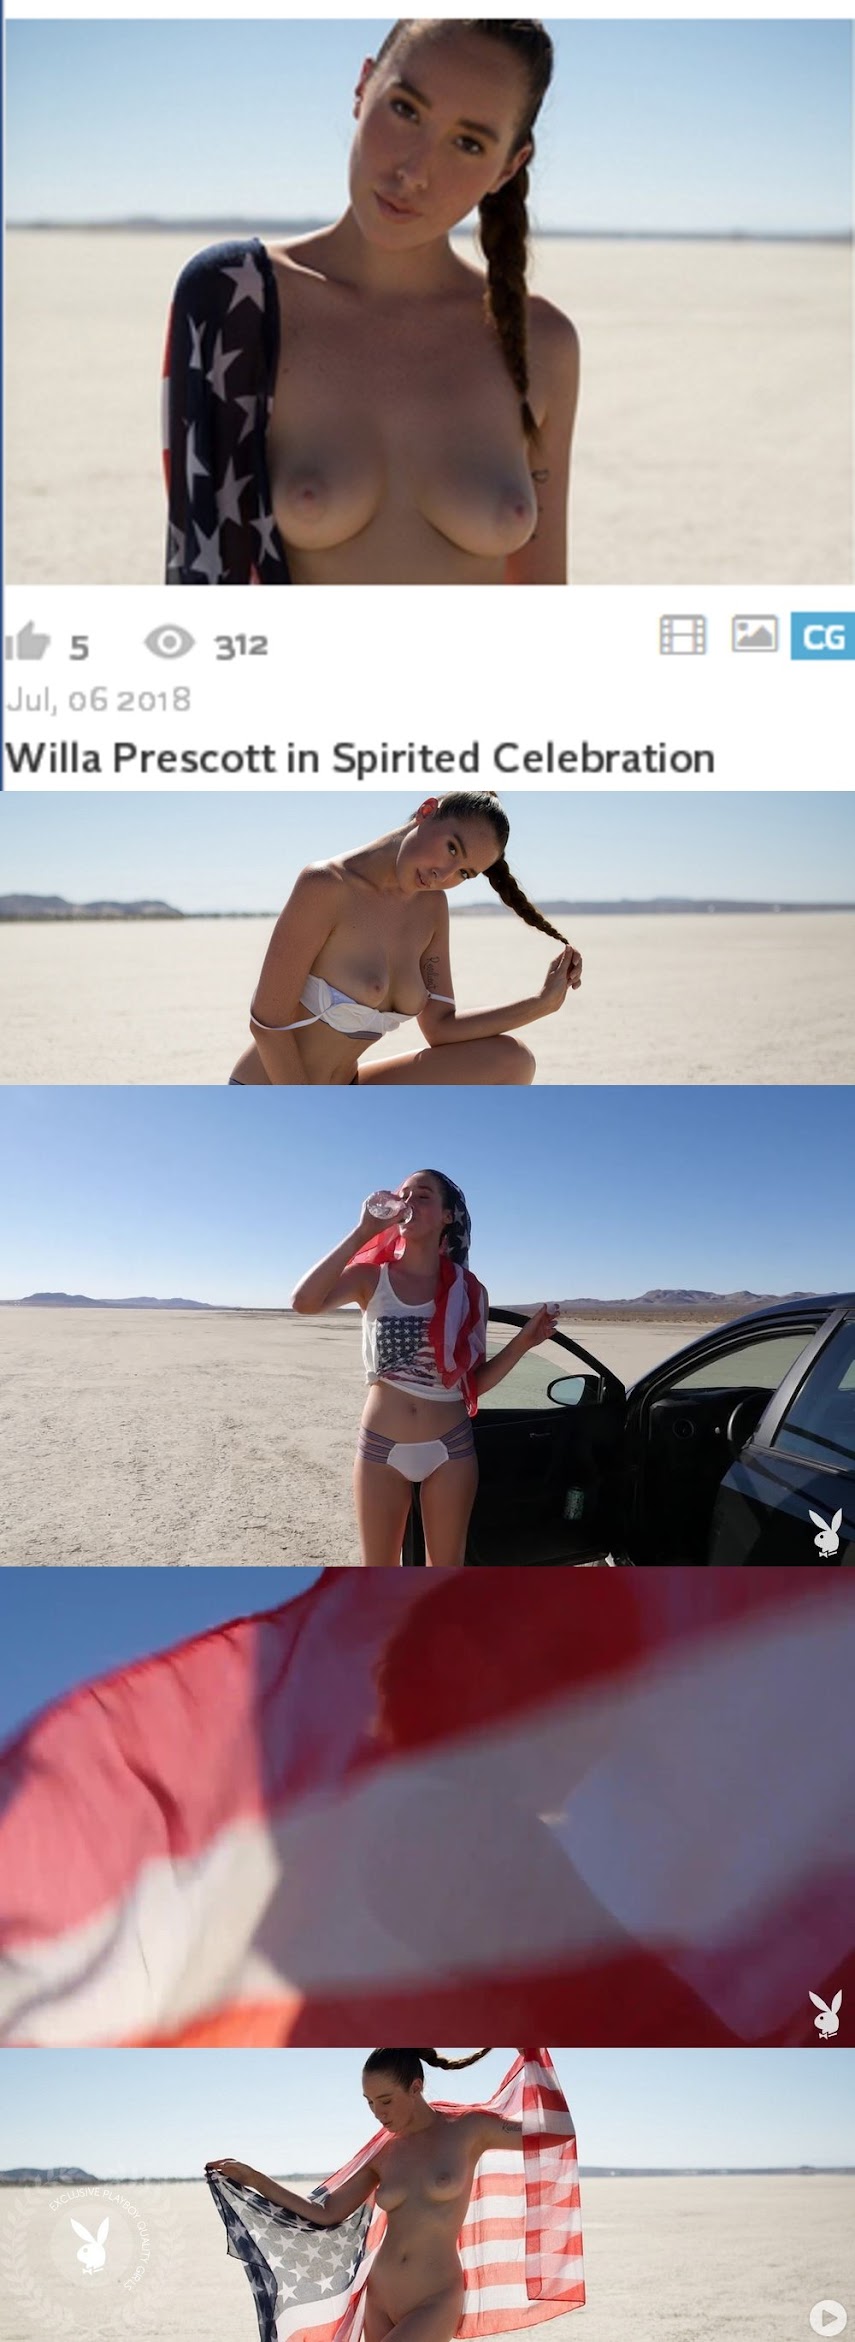 PlayboyPlus2018-07-06_Willa_Prescott_in_Spirited_Celebration.rar-jk- Playboy PlayboyPlus2018-07-06 Willa Prescott in Spirited Celebration